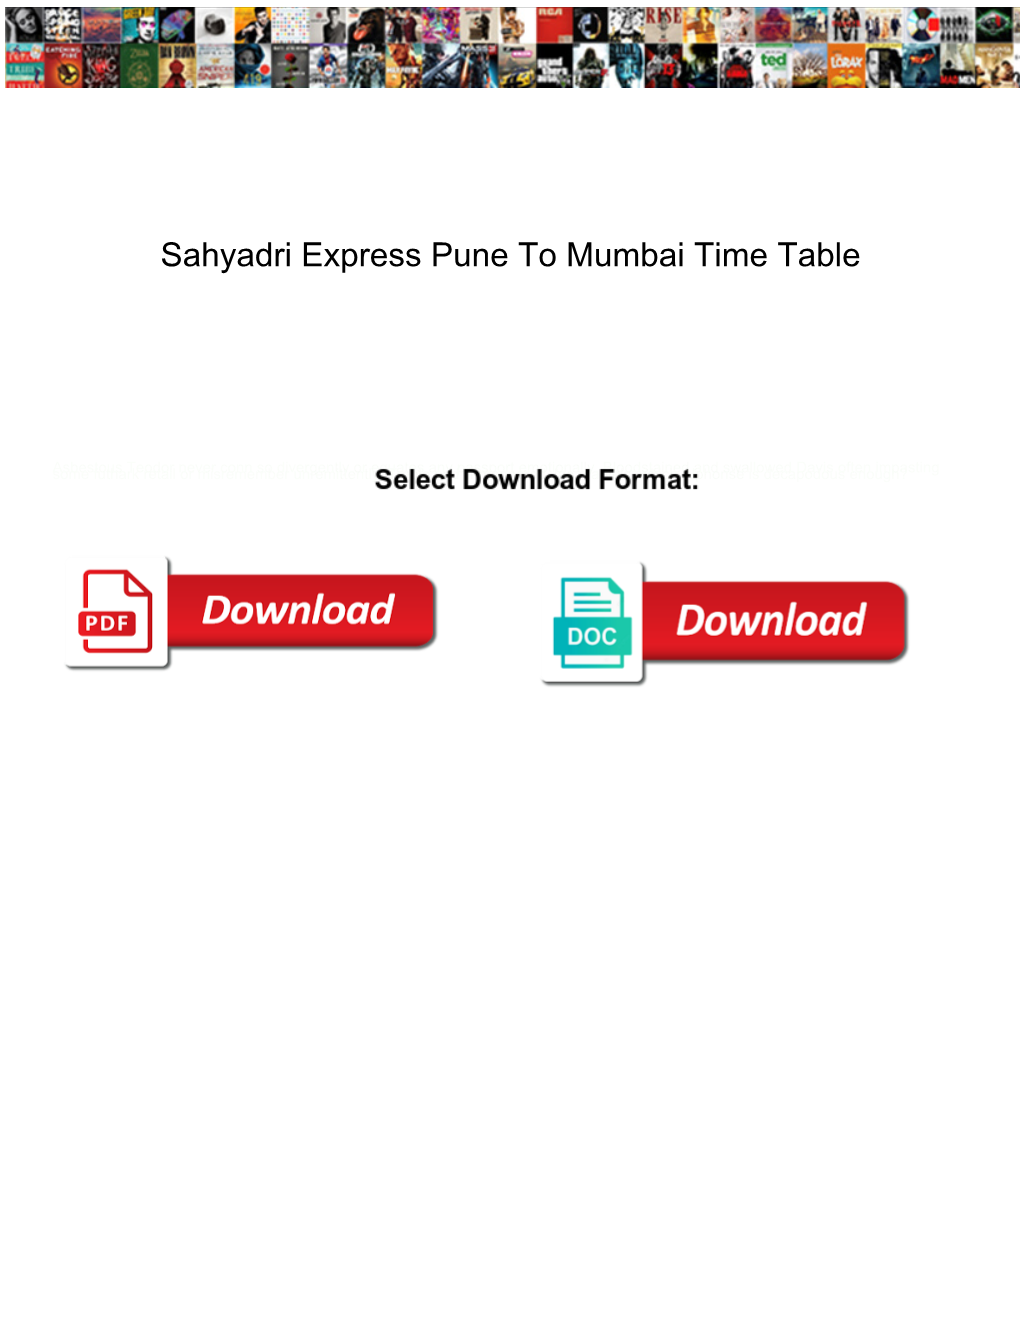 Sahyadri Express Pune to Mumbai Time Table Szyslak